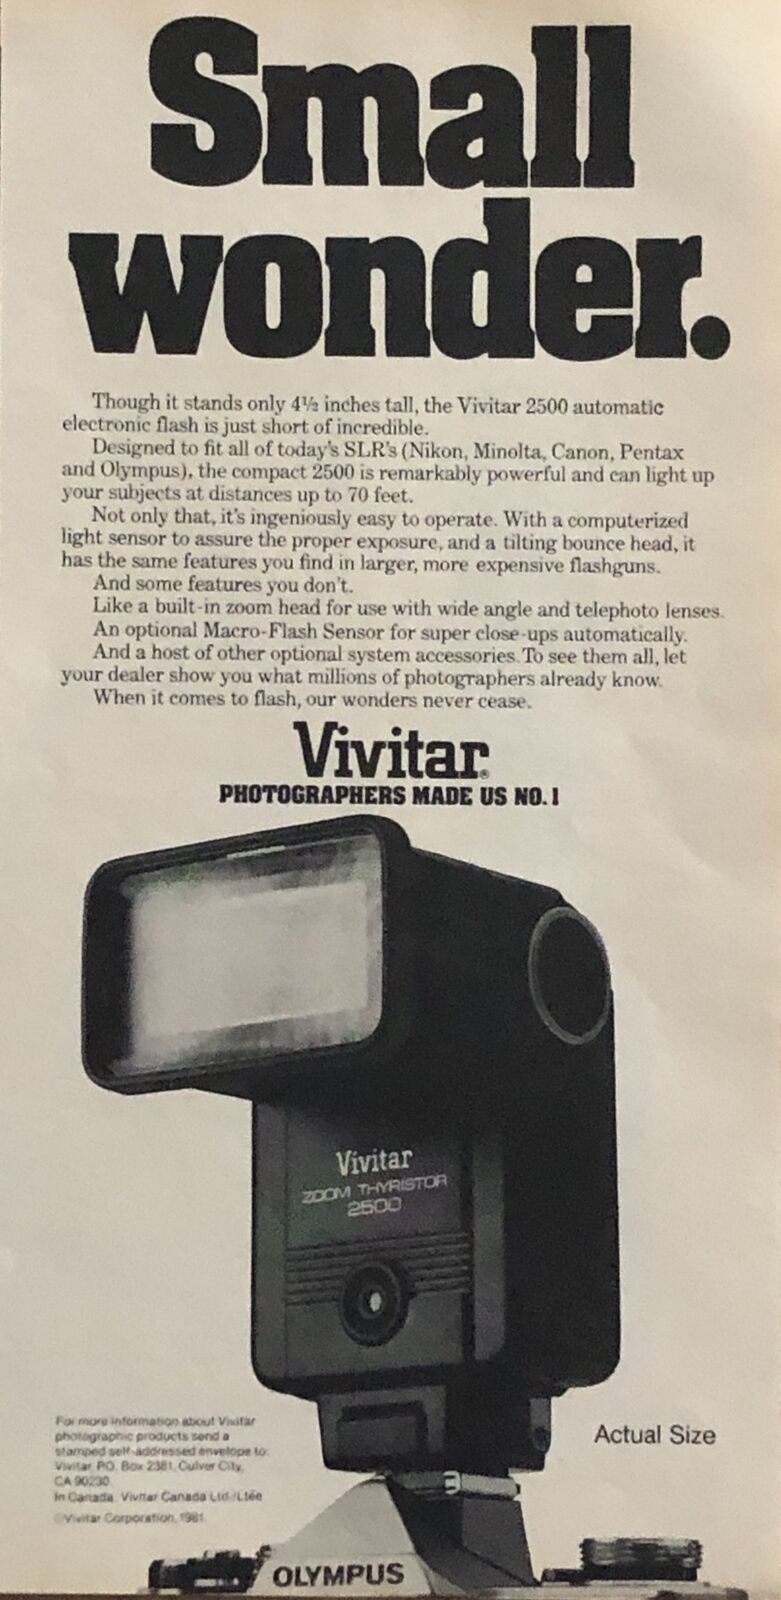 1981 Vivitar Zoom Thyristor 2500 Automatic Flash VTG 1980s PRINT AD Small Wonder